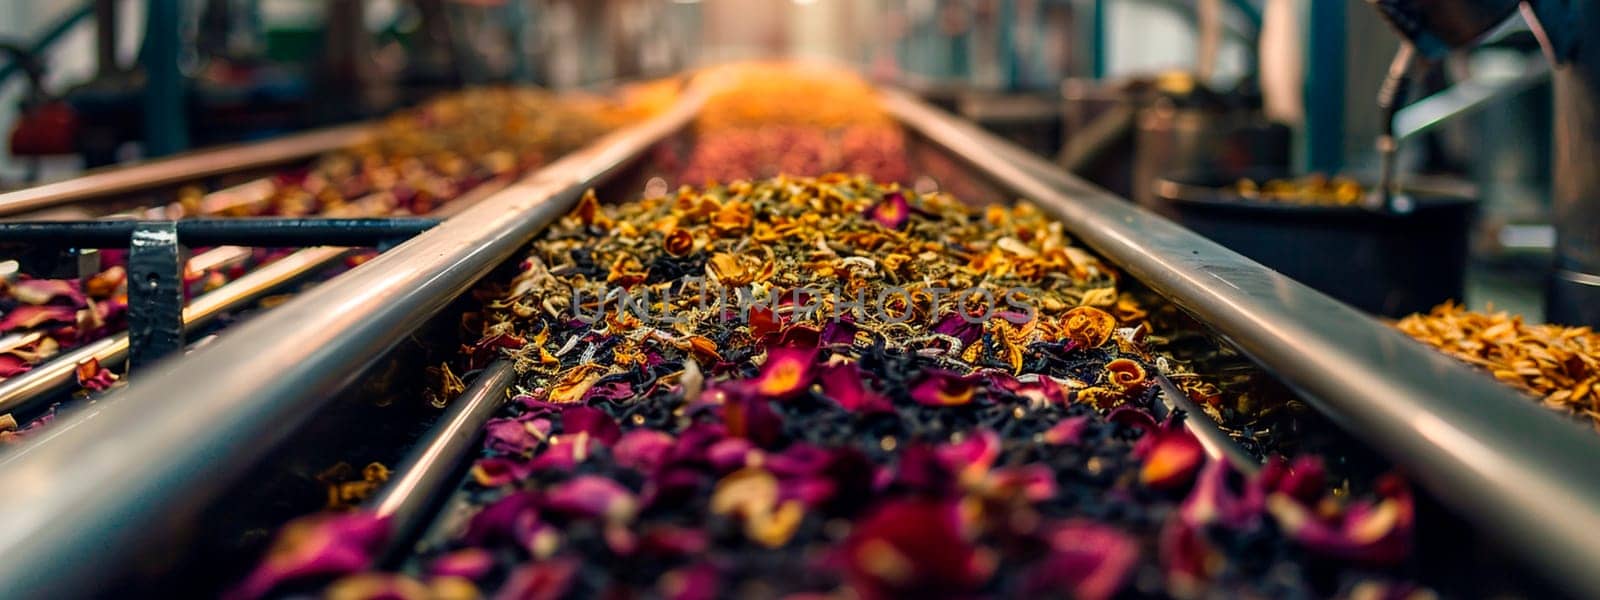 tea in the factories industry. selective focus. by yanadjana